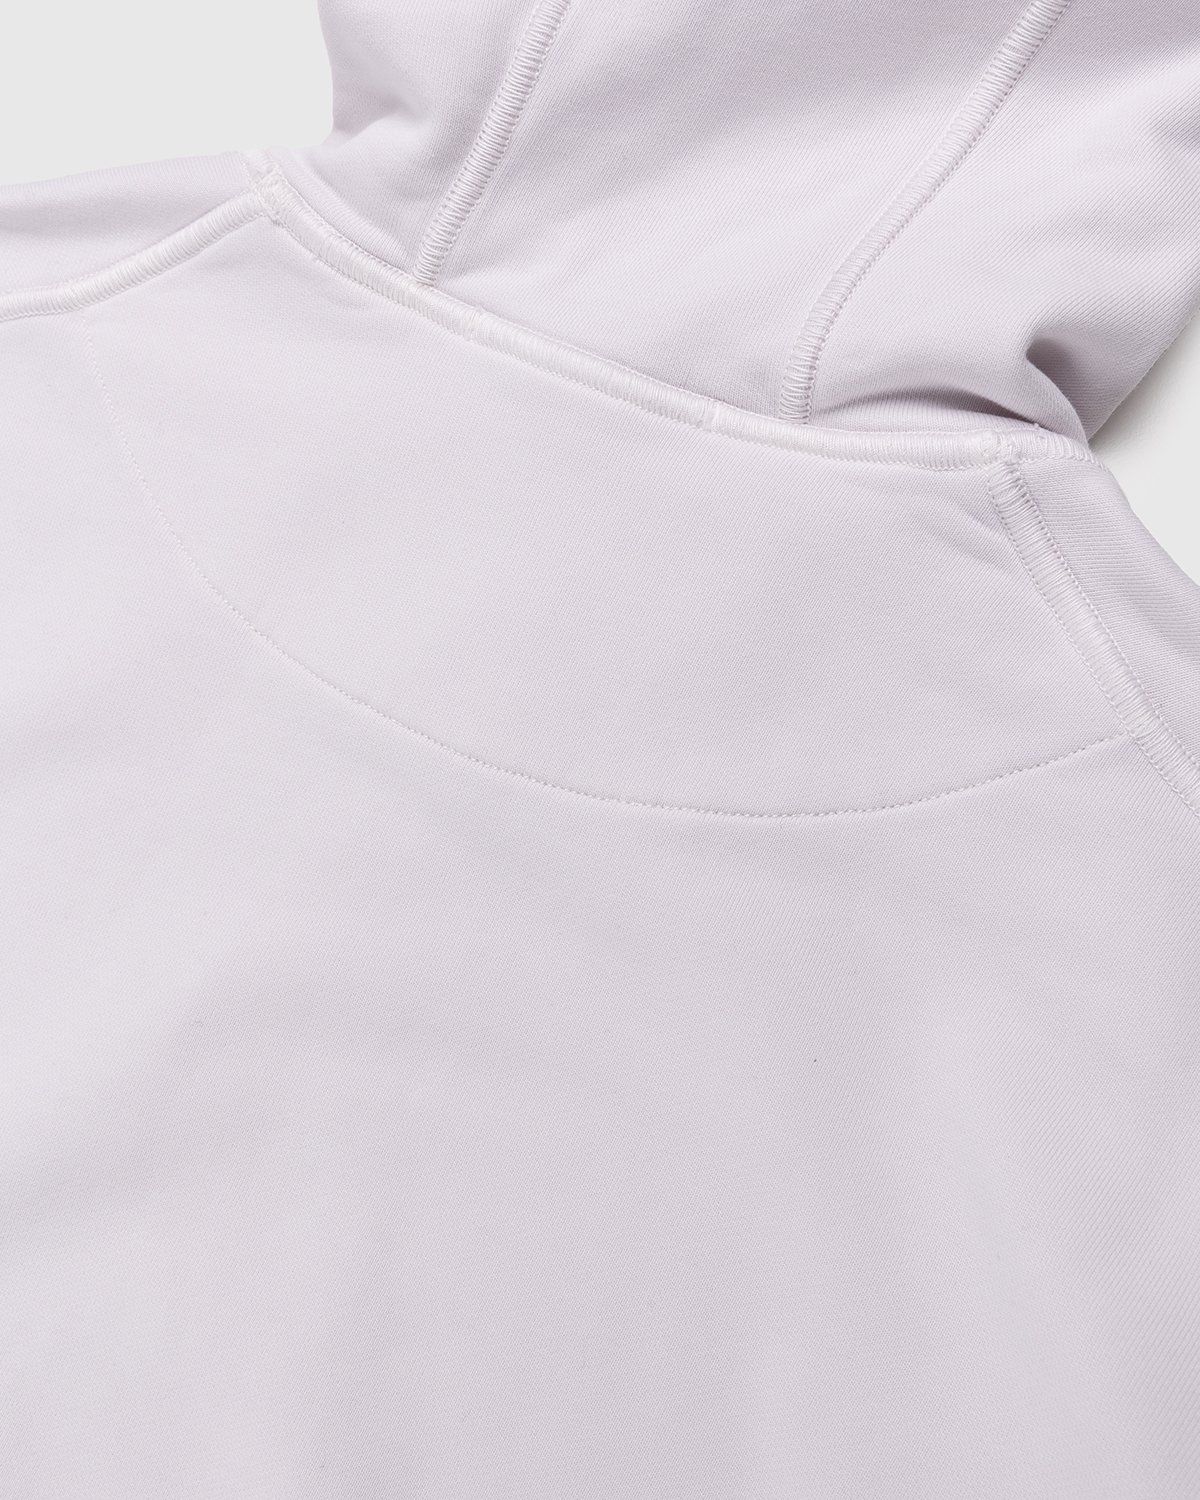 Stone Island – 64151 Garment-Dyed Cotton Fleece Hoodie Pink - Sweats - Pink - Image 3